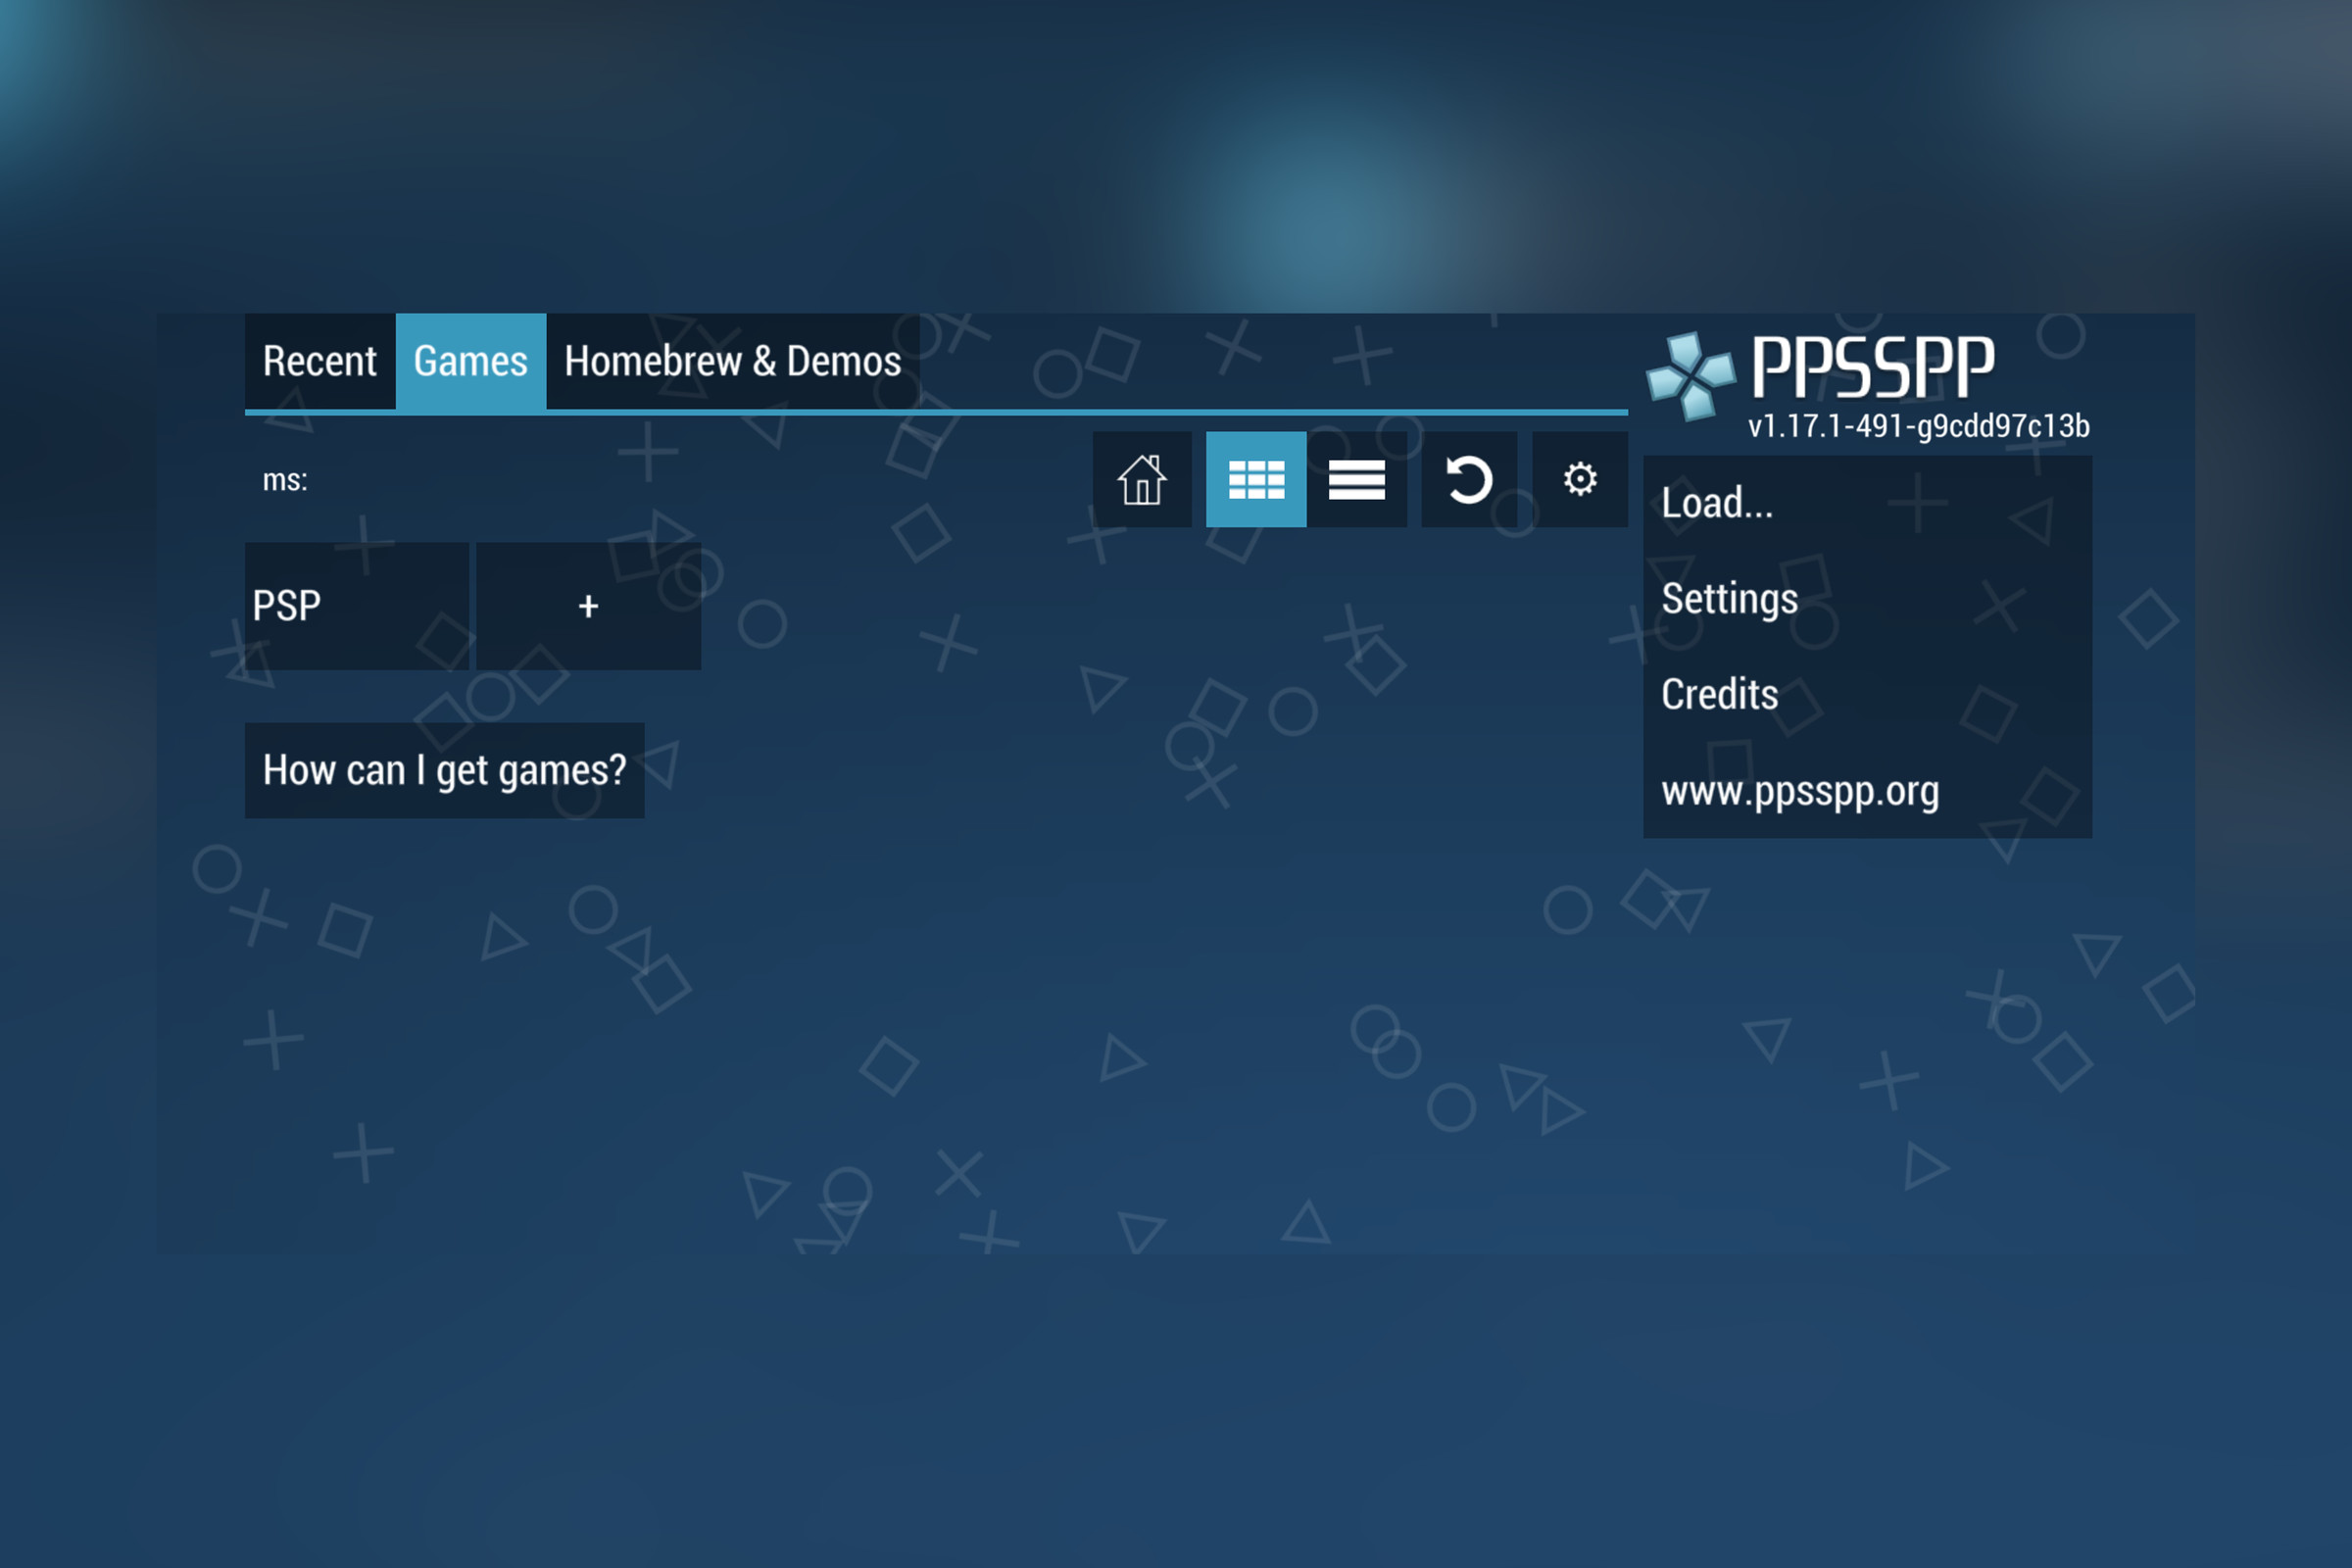 A screenshot of the PPSSPP app.